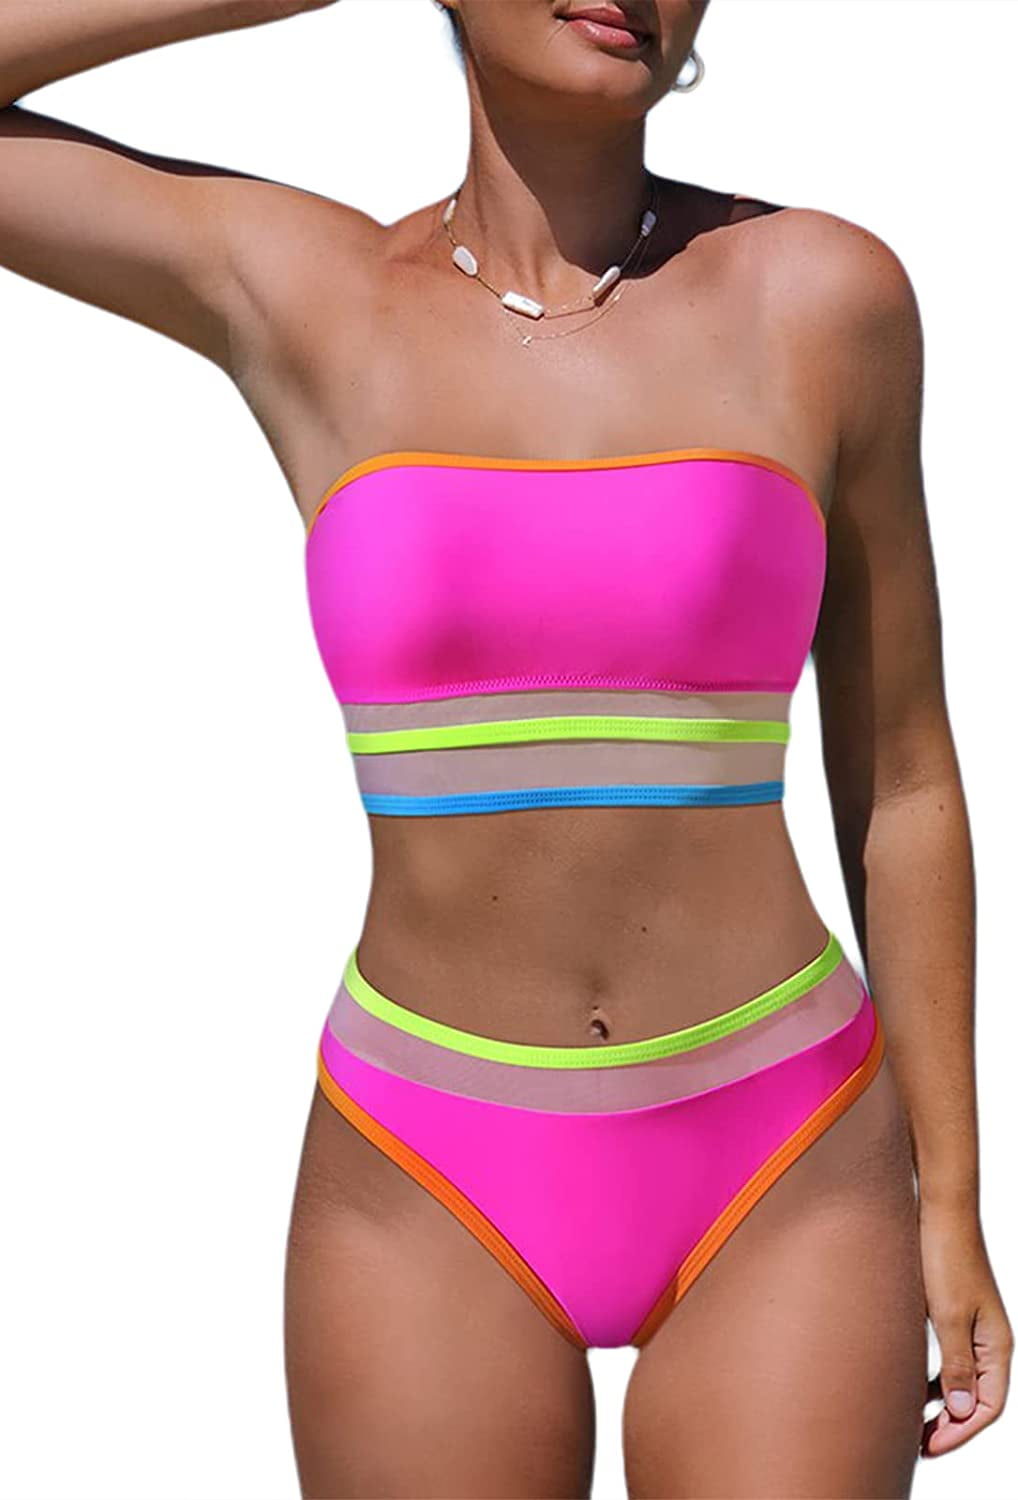 Roaso Women's Strapless Bandeau Push up Waisted Swimwear Swimsuit Bikini Set - Walmart.com